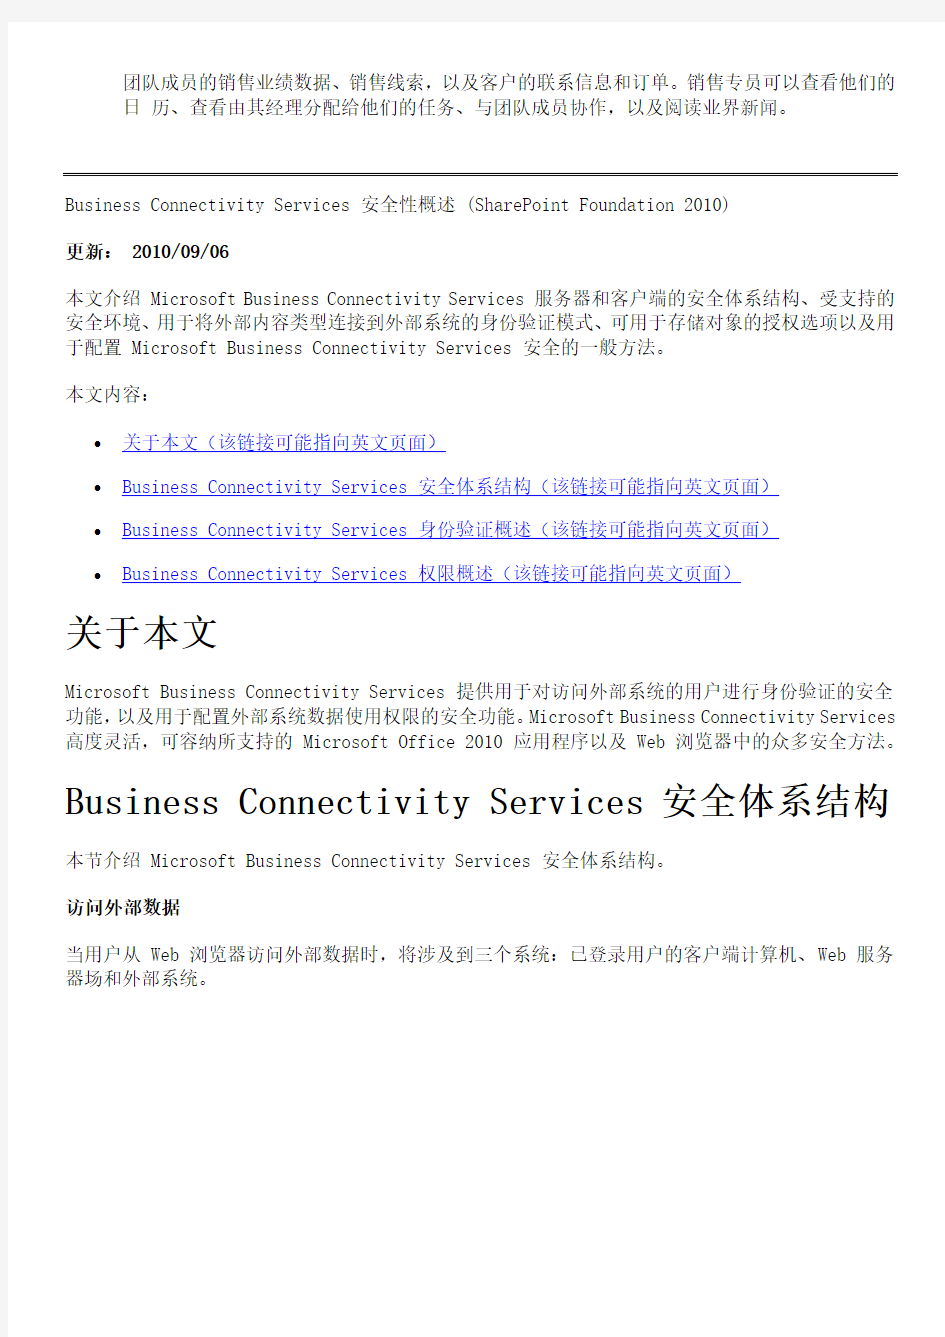 Business Connectivity Services 概述